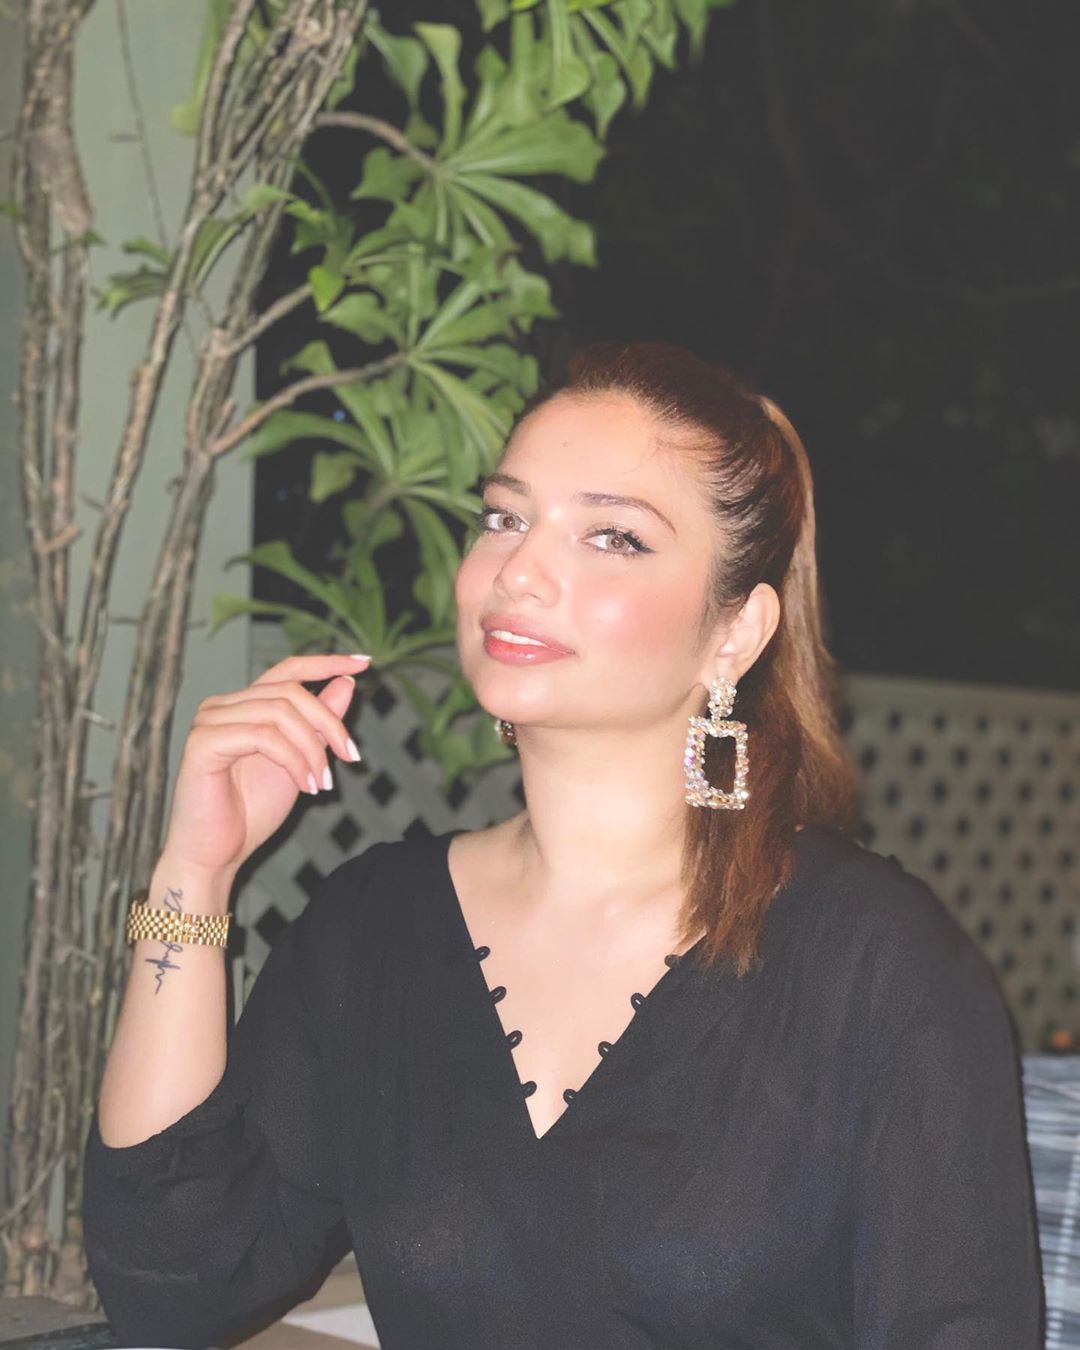 Faisal Qureshi Daughter Amazing Weight Loss